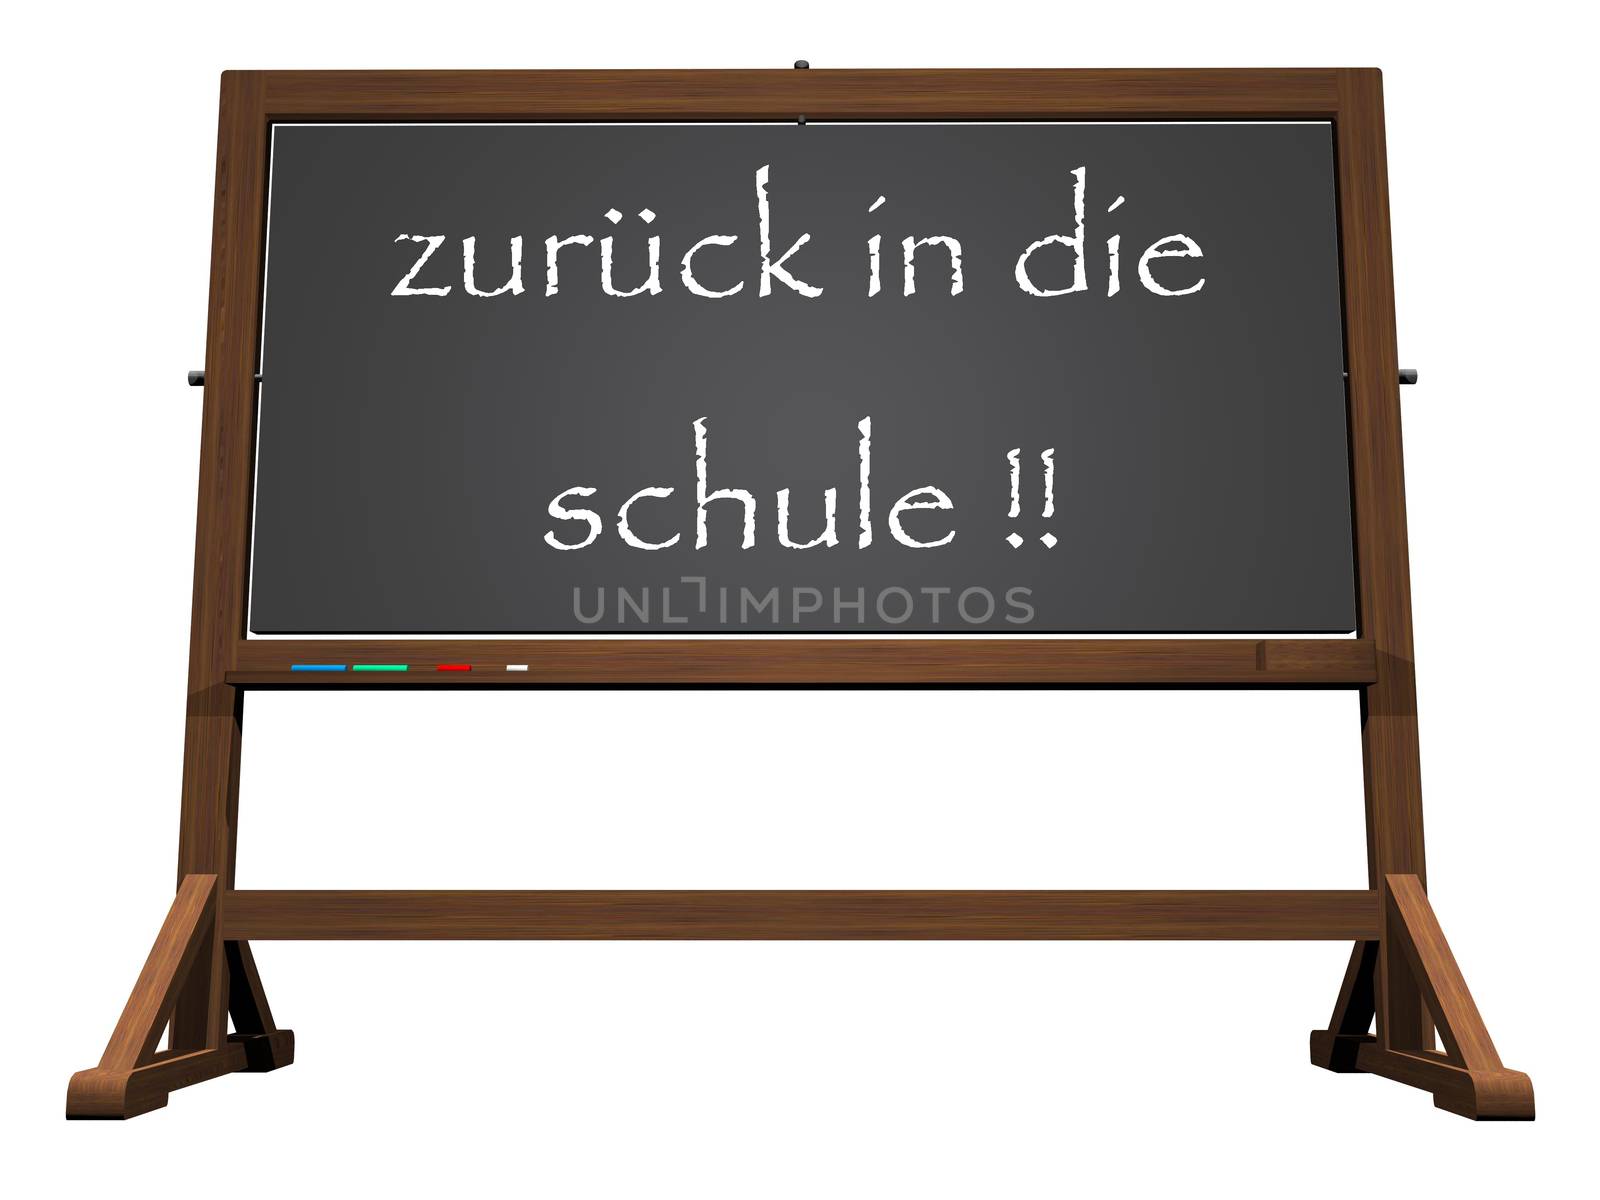 School blackboard german back to school isolated in white background - 3D render